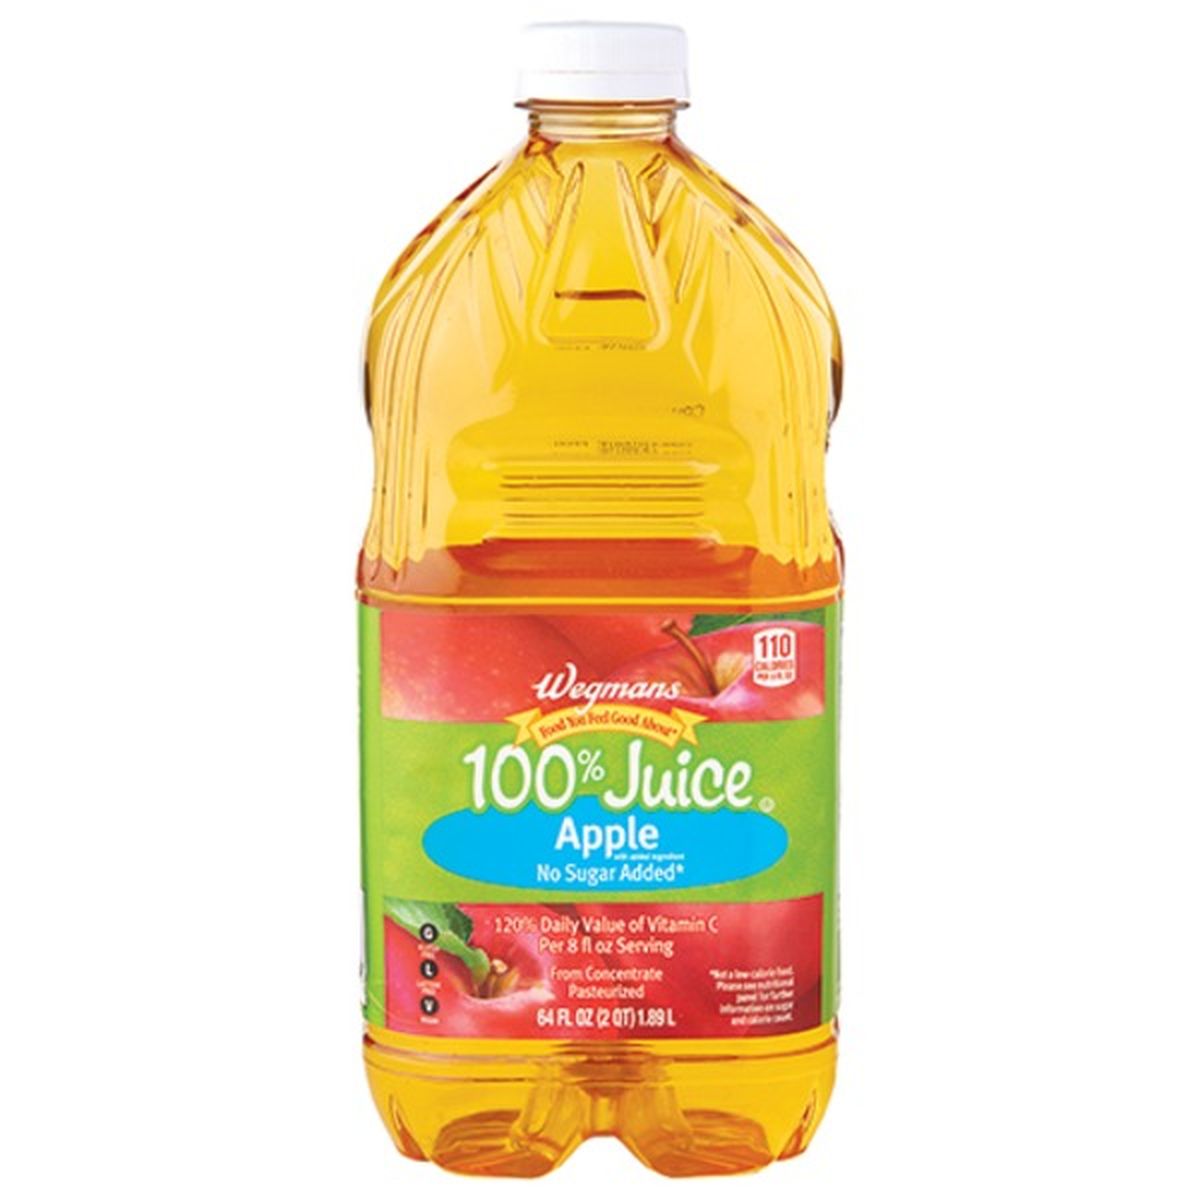 Calories in Wegmans 100% Juice, Apple, No Sugar Added*